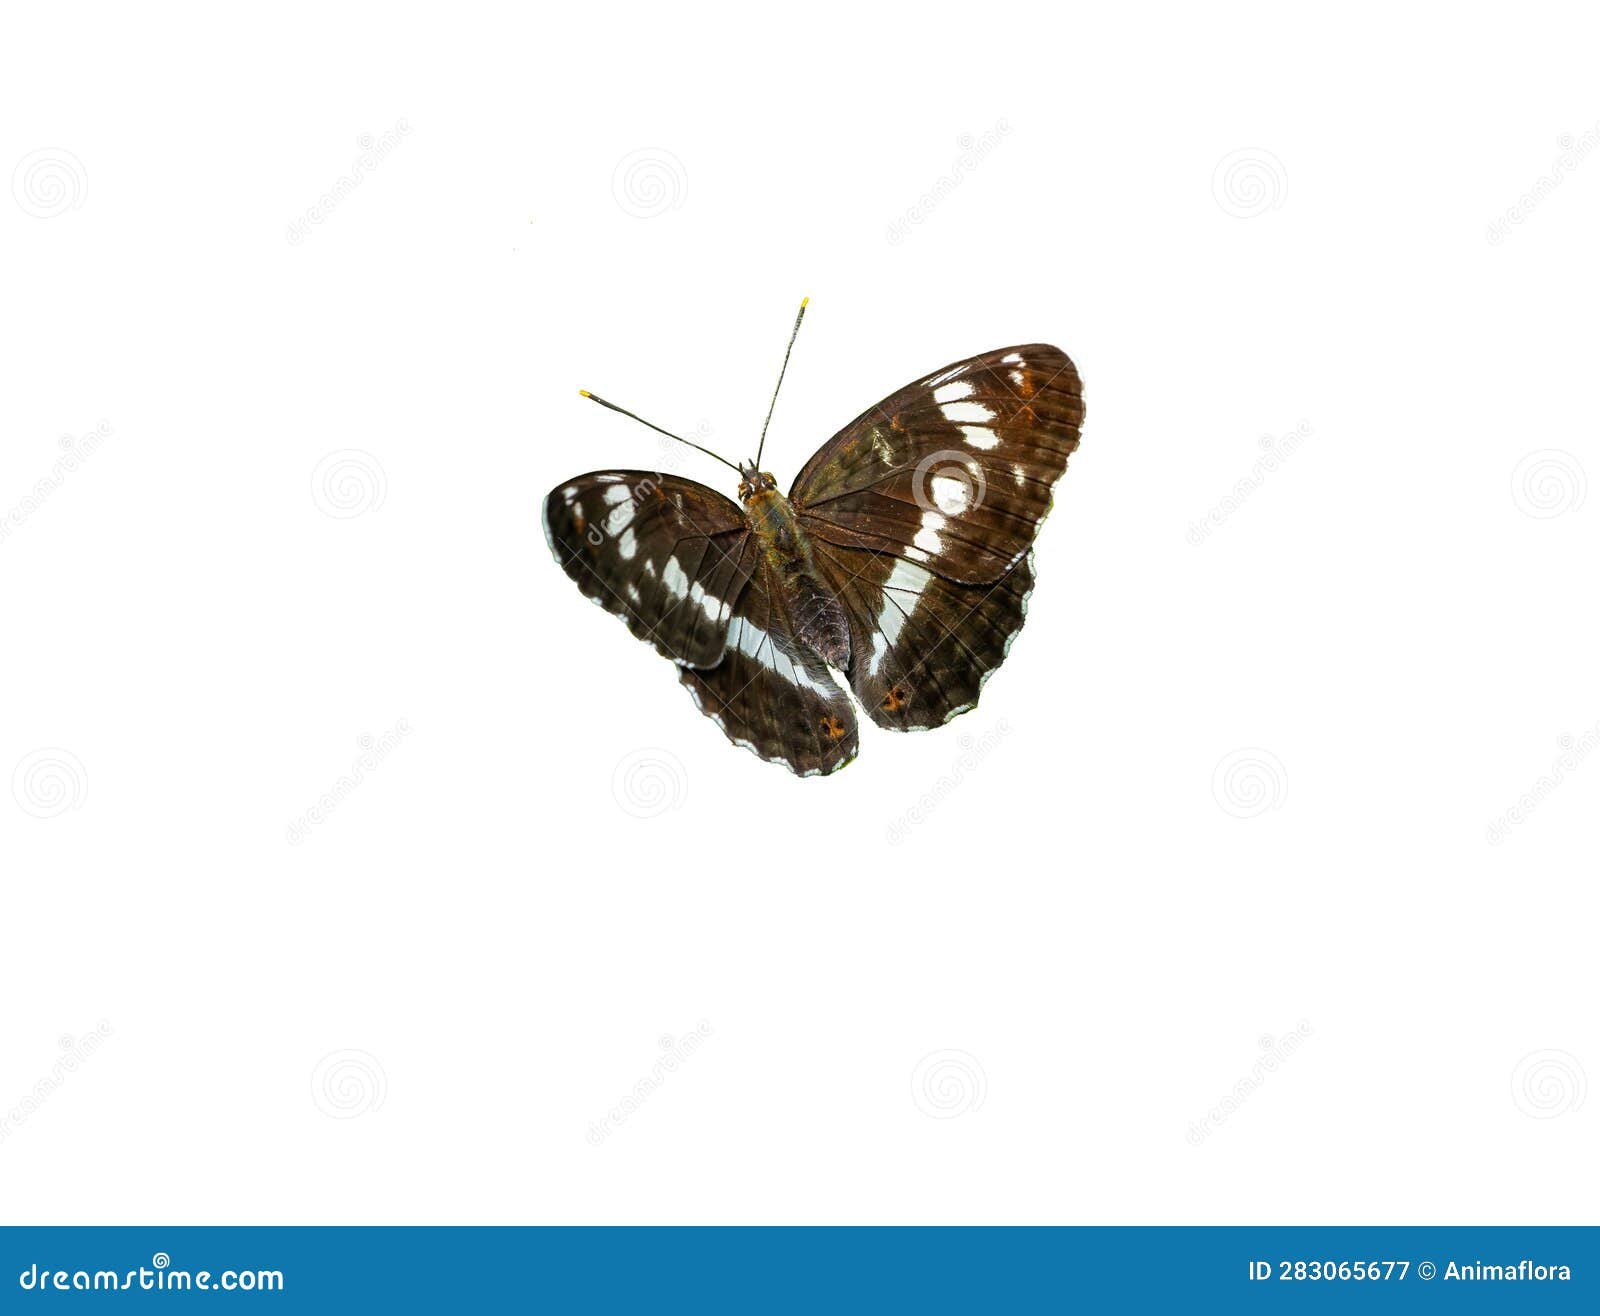 white admira, limenitis camilla, butterfly on white background